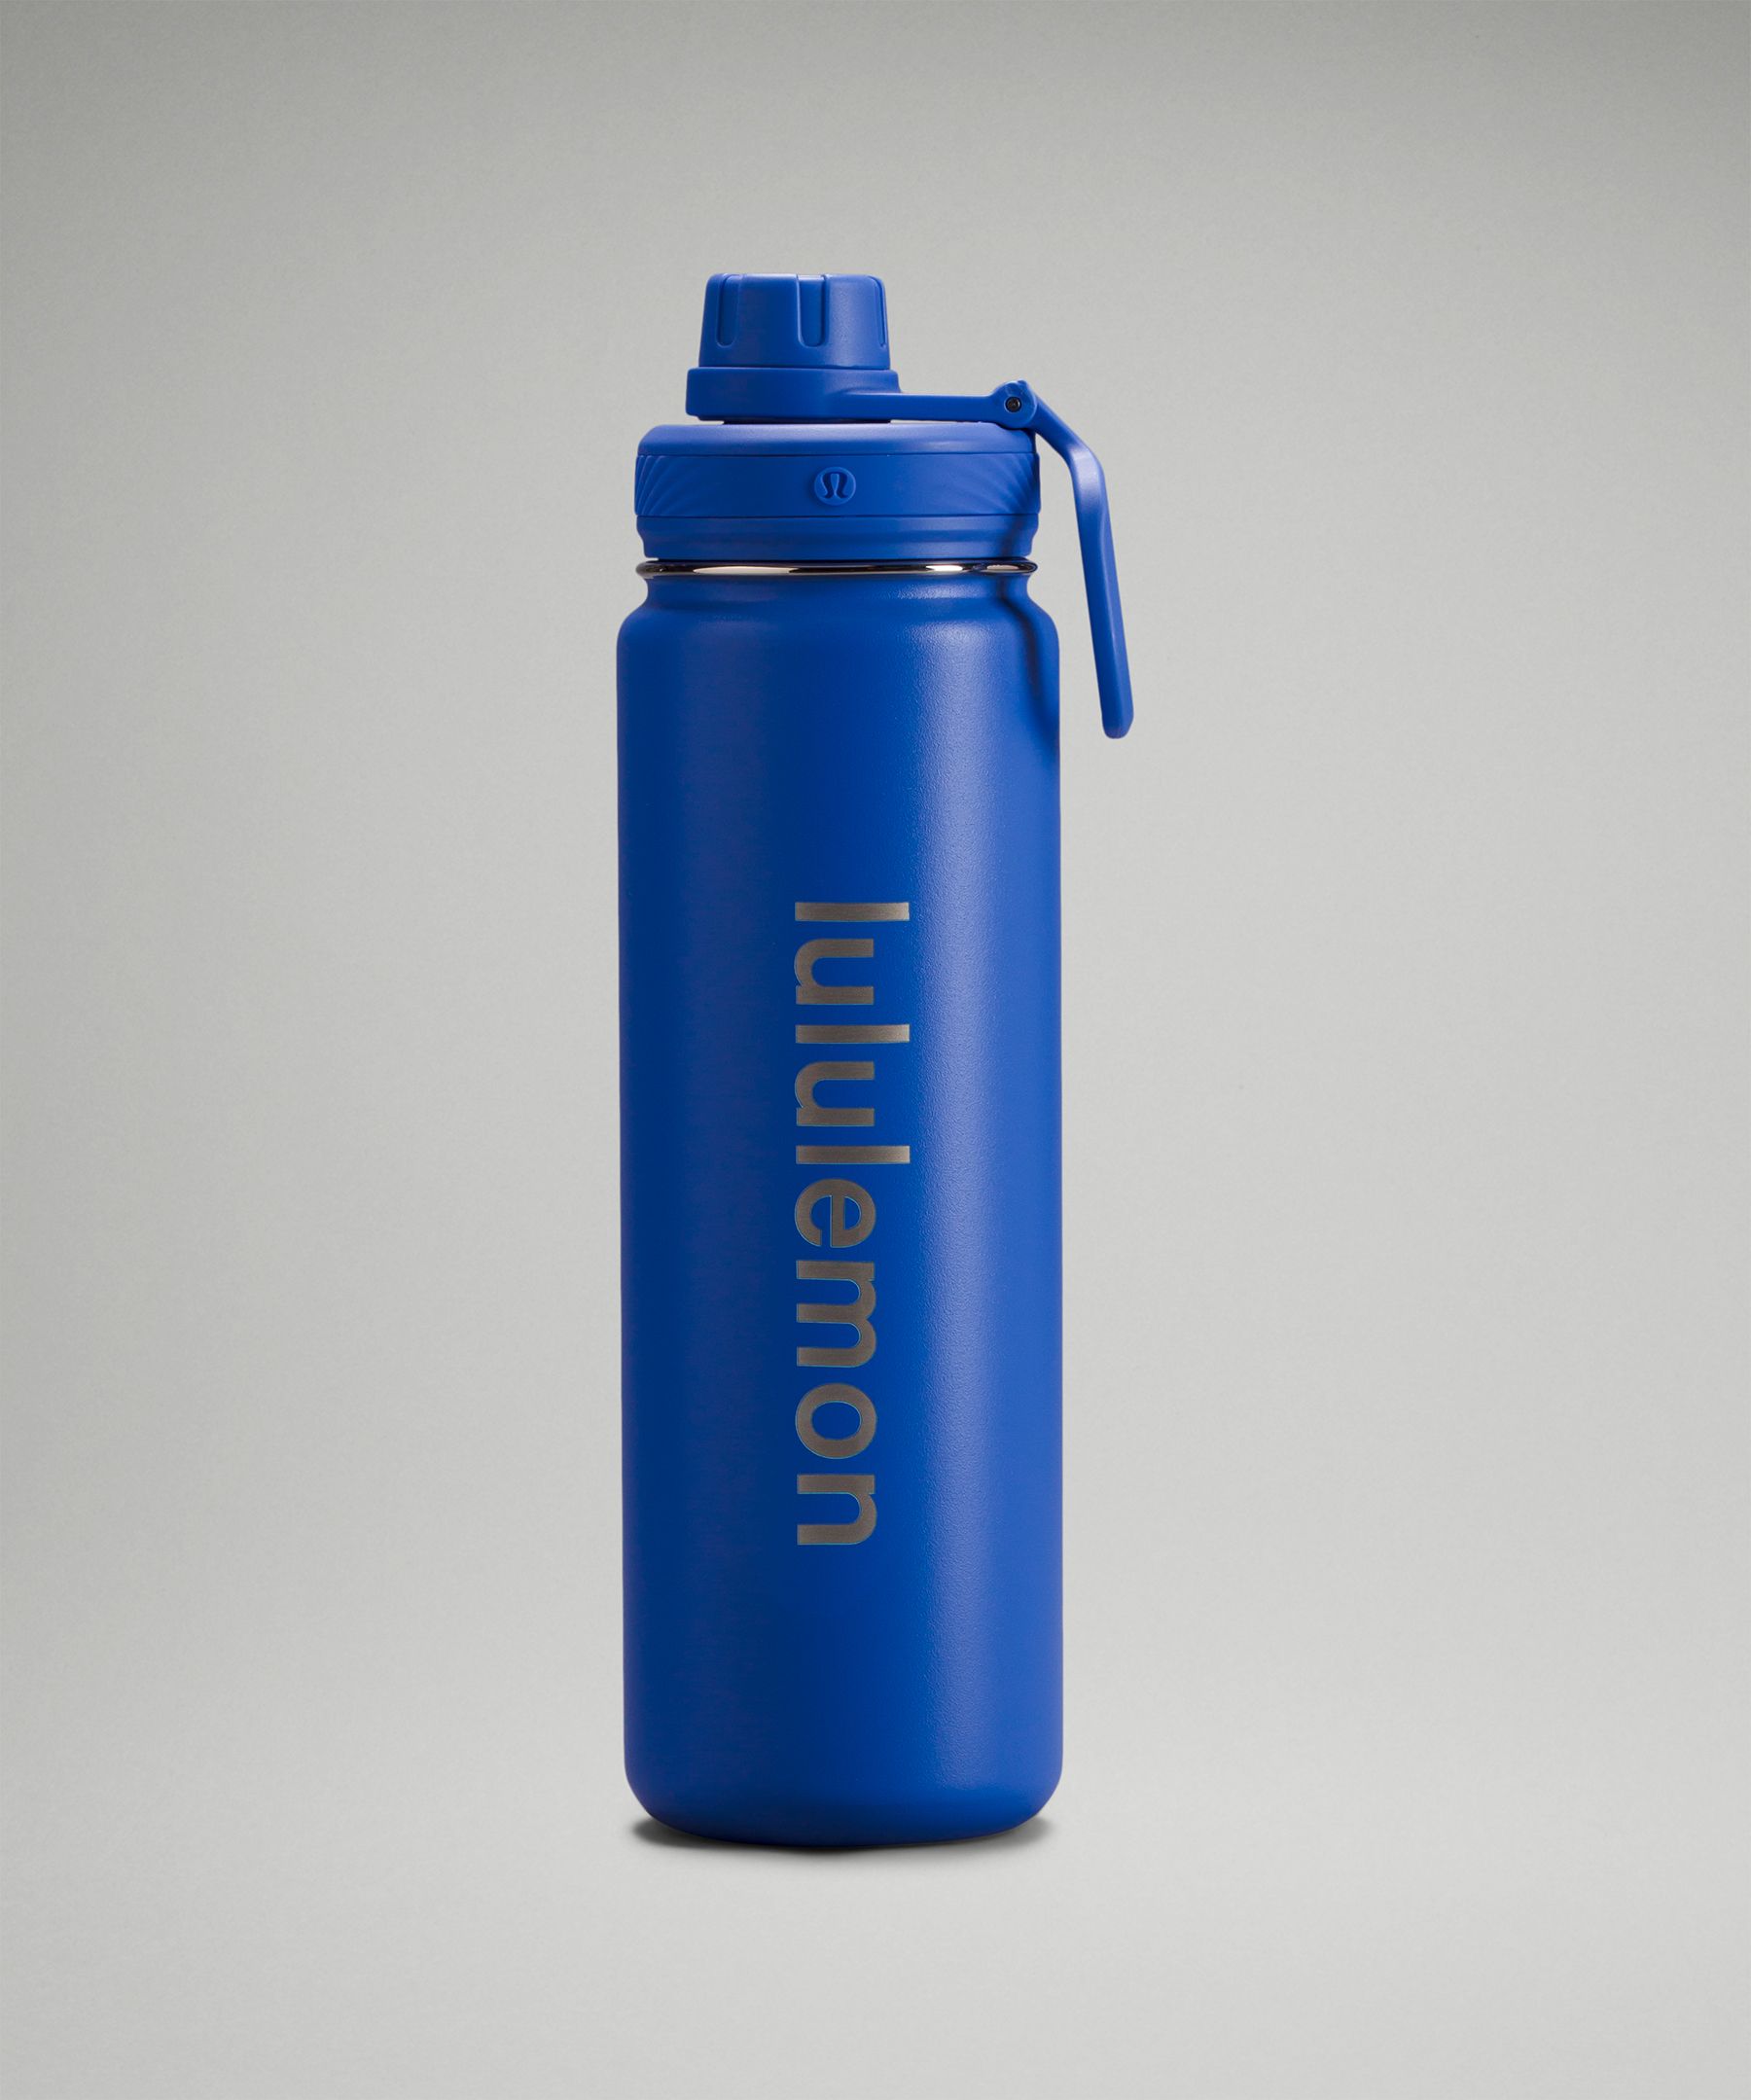 Lululemon athletica Back to Life Sport Bottle 24oz, Unisex Water Bottles